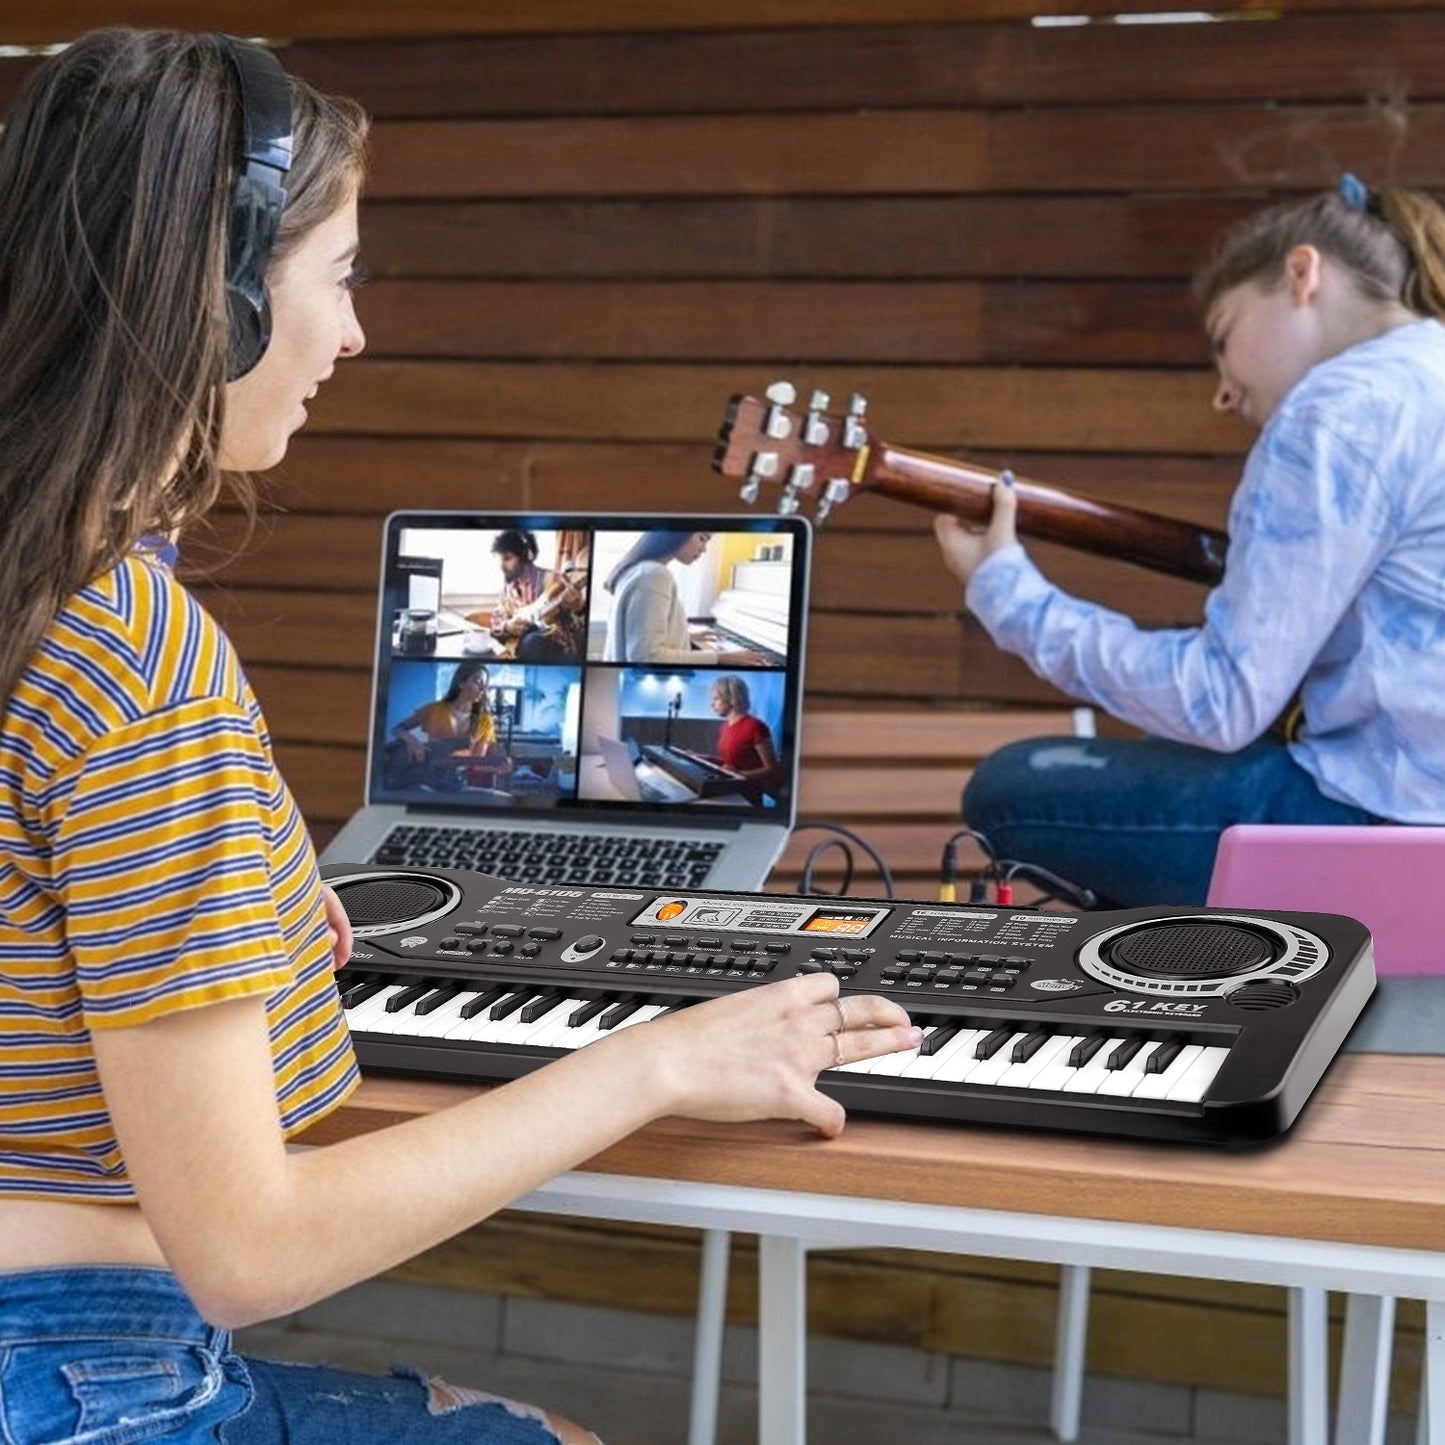 61 Keys Digital Music Electronic Keyboard Electric Piano Musical Instrument Kids Learning Keyboard